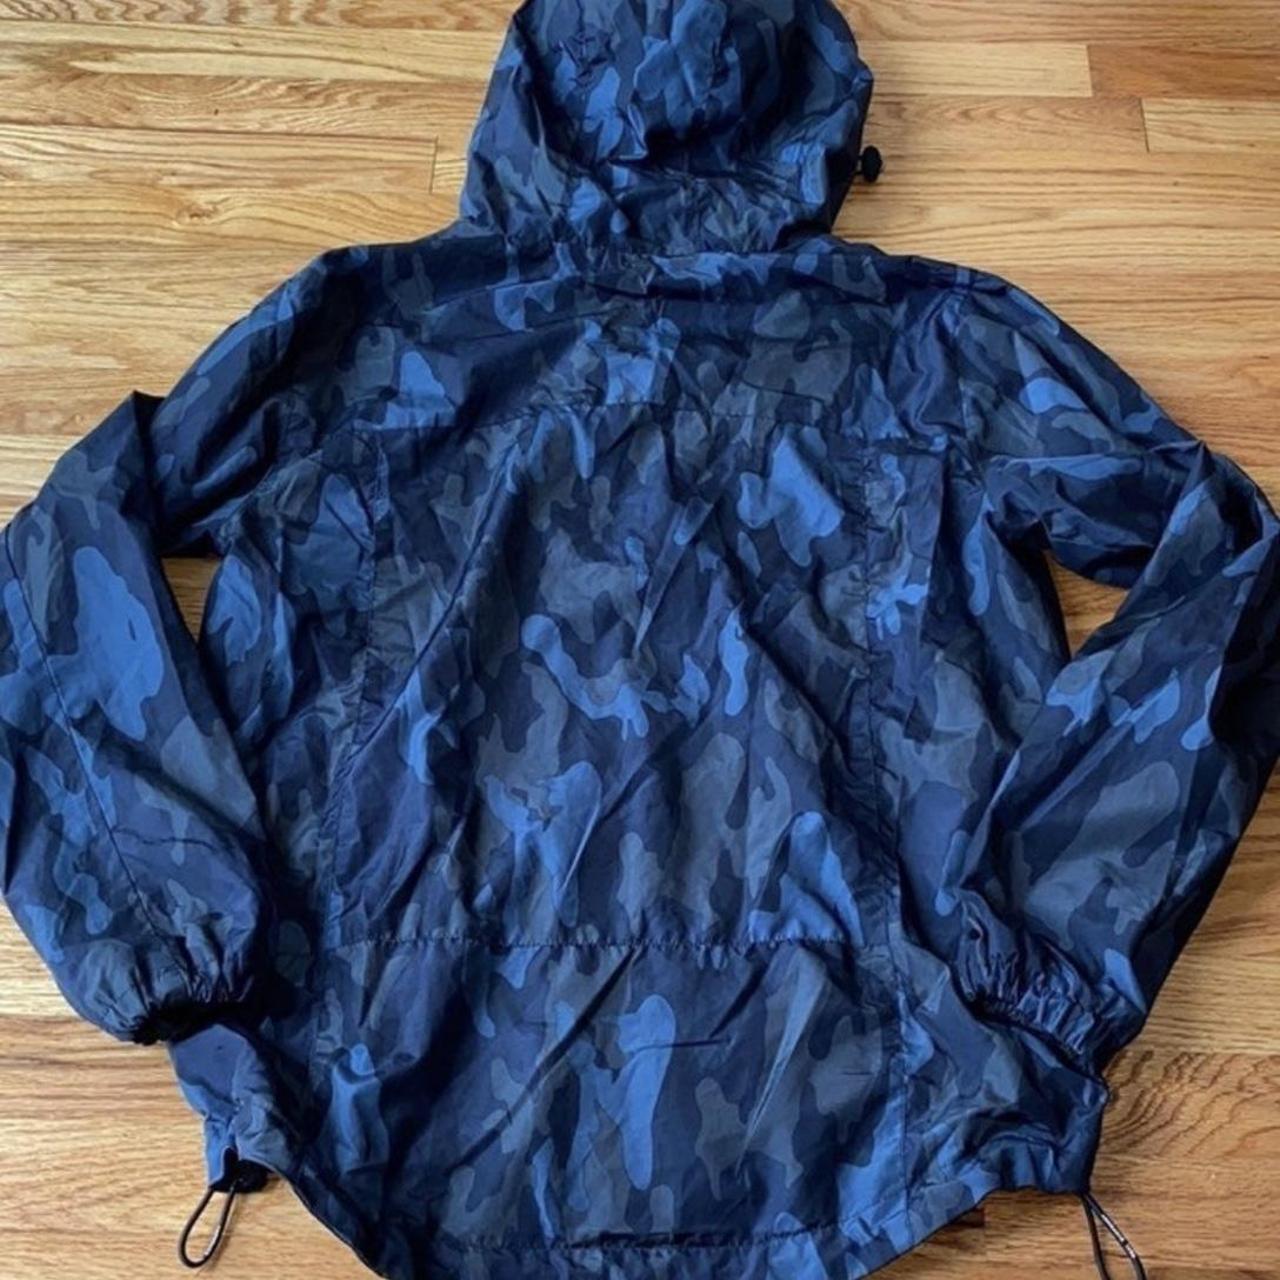 Product Image 3 - SUPERDRY Men’s rain jacket
Excellent condition